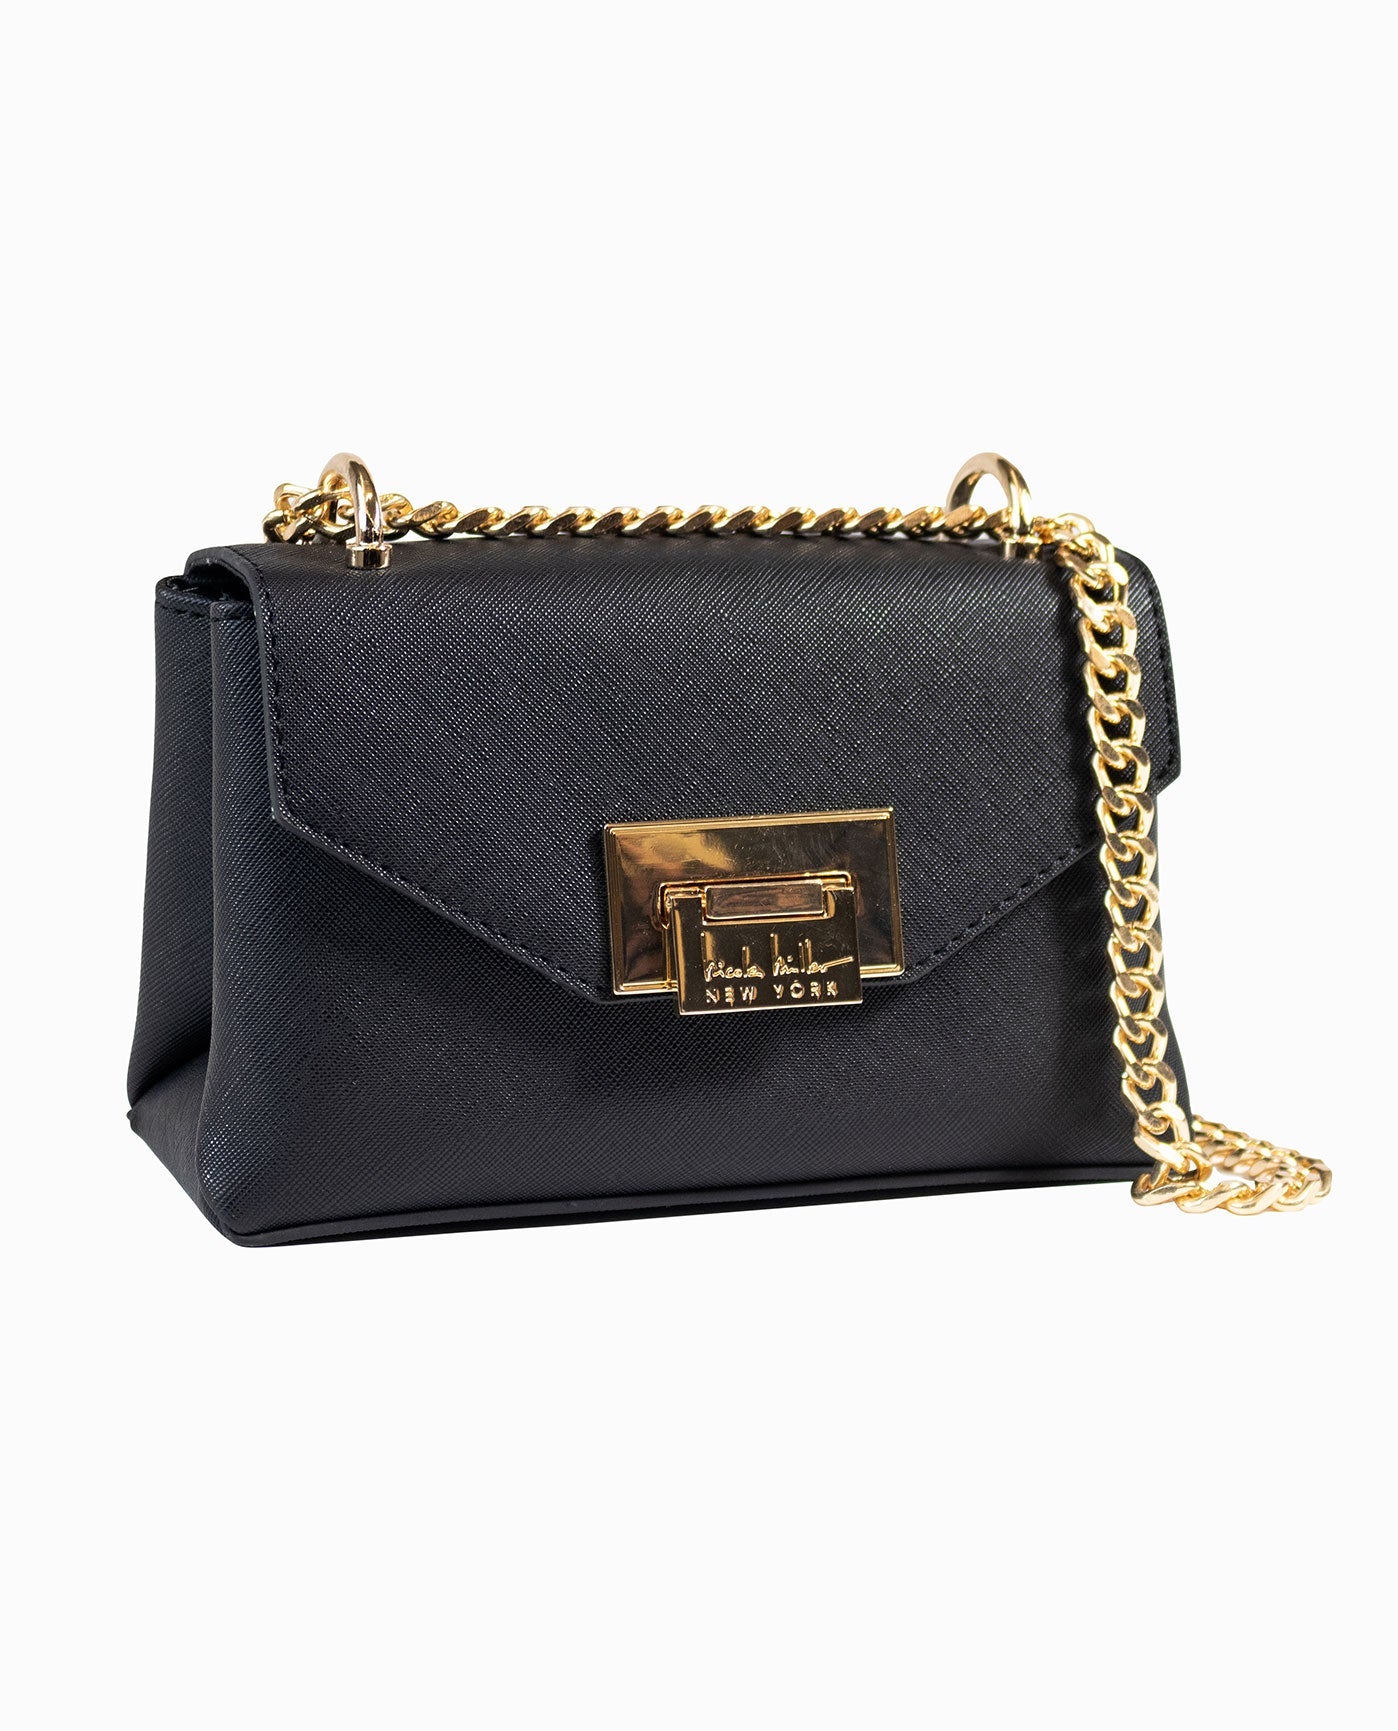 Celine - Wallet on Chain Margo in Shiny Calfskin Leather - Black - for Women - Gift Selection